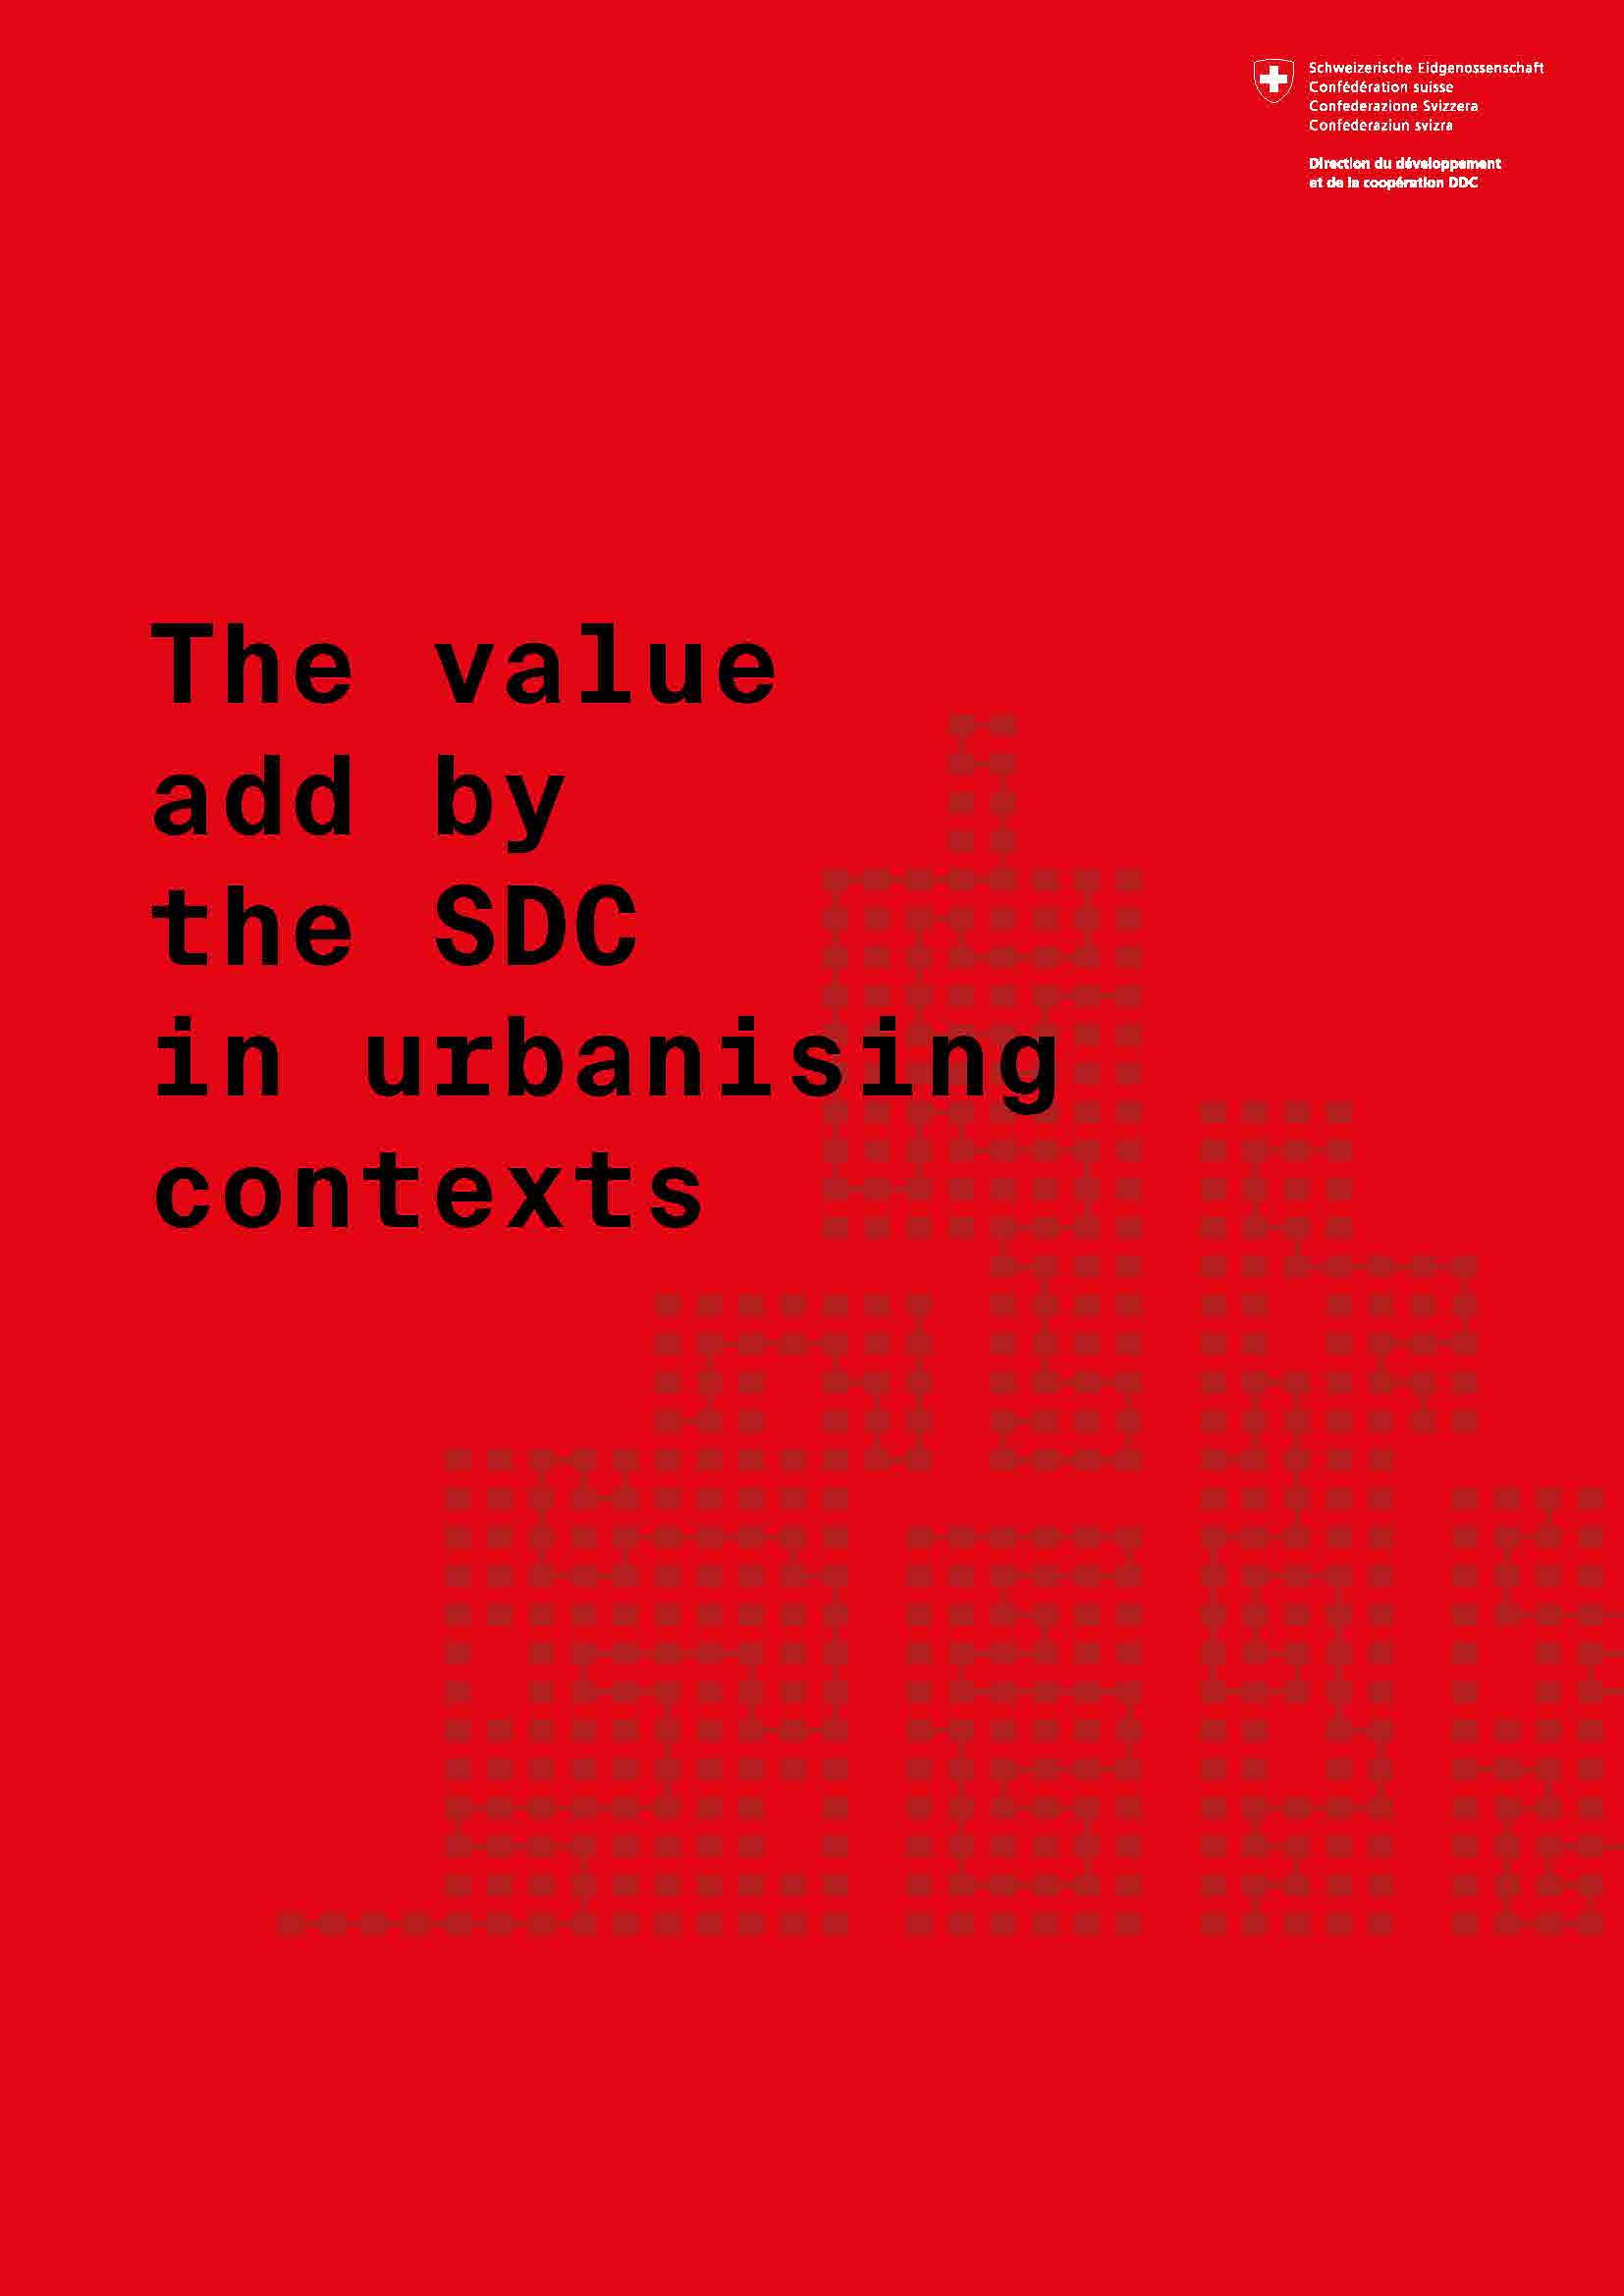 SDC_Urbanisation_Report cover